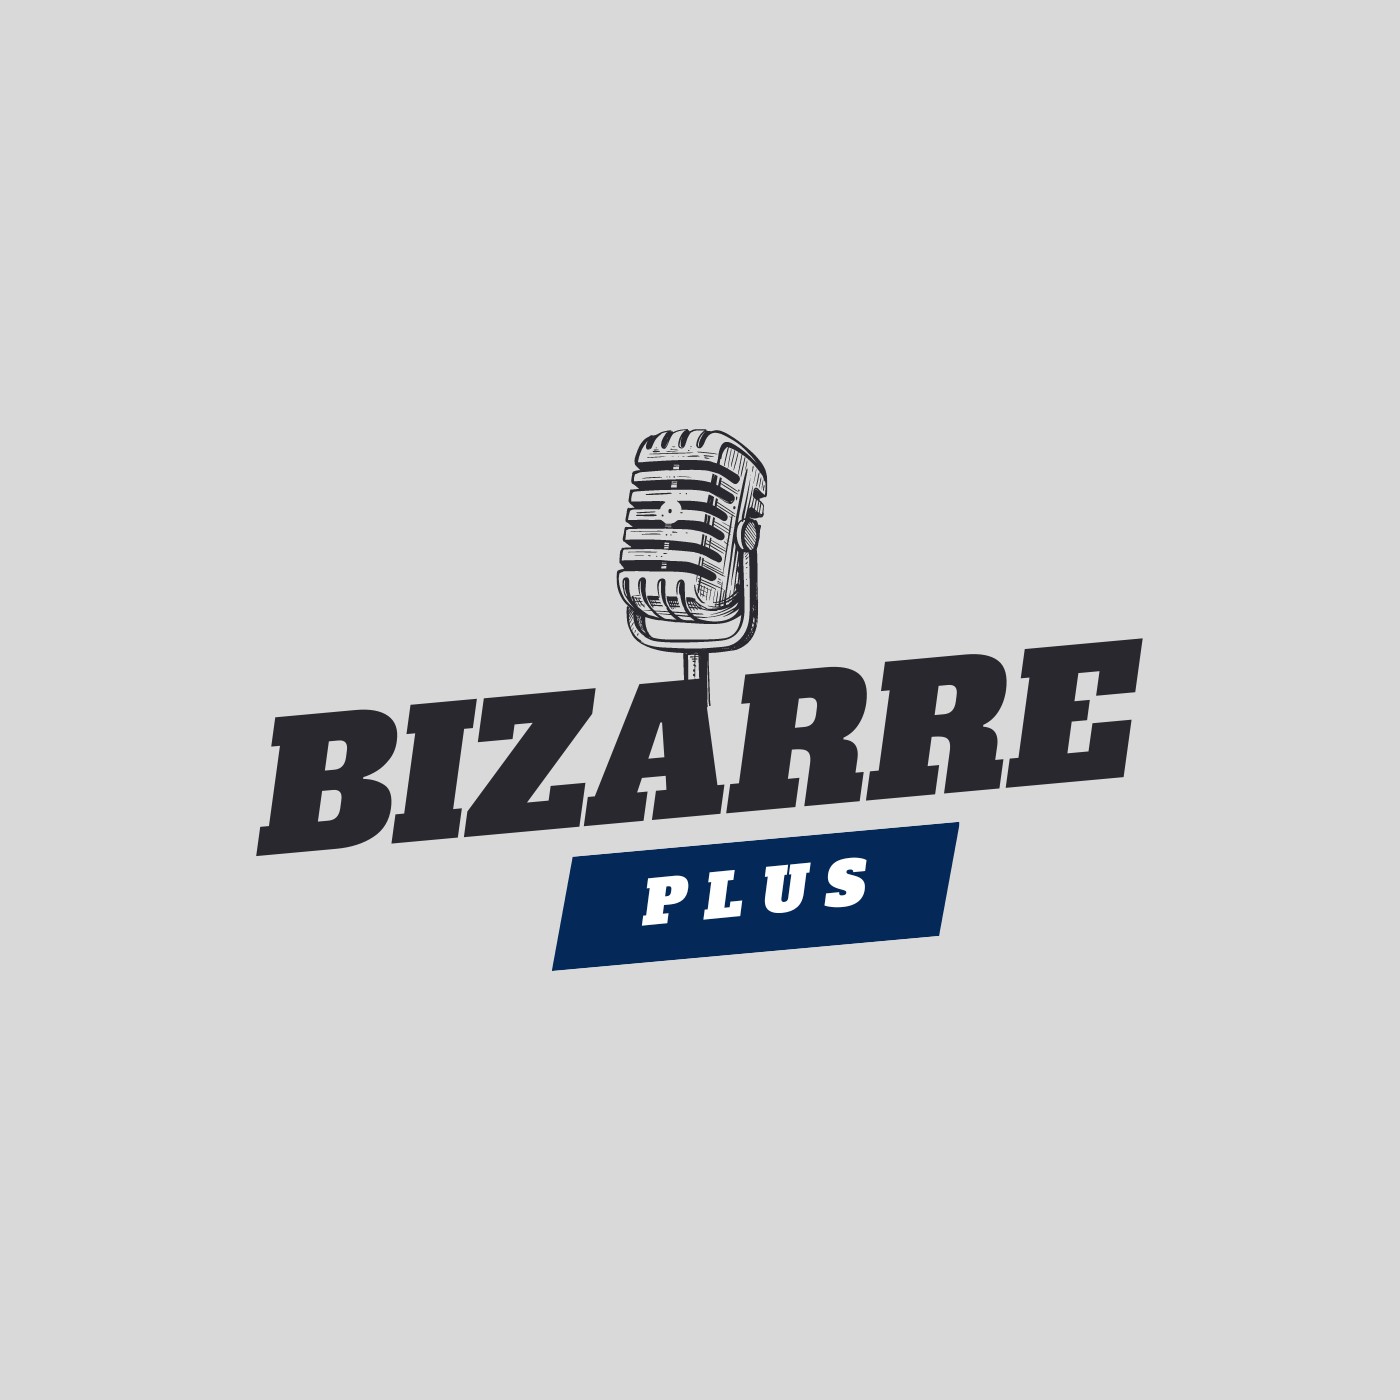 Bizarre Plus logo